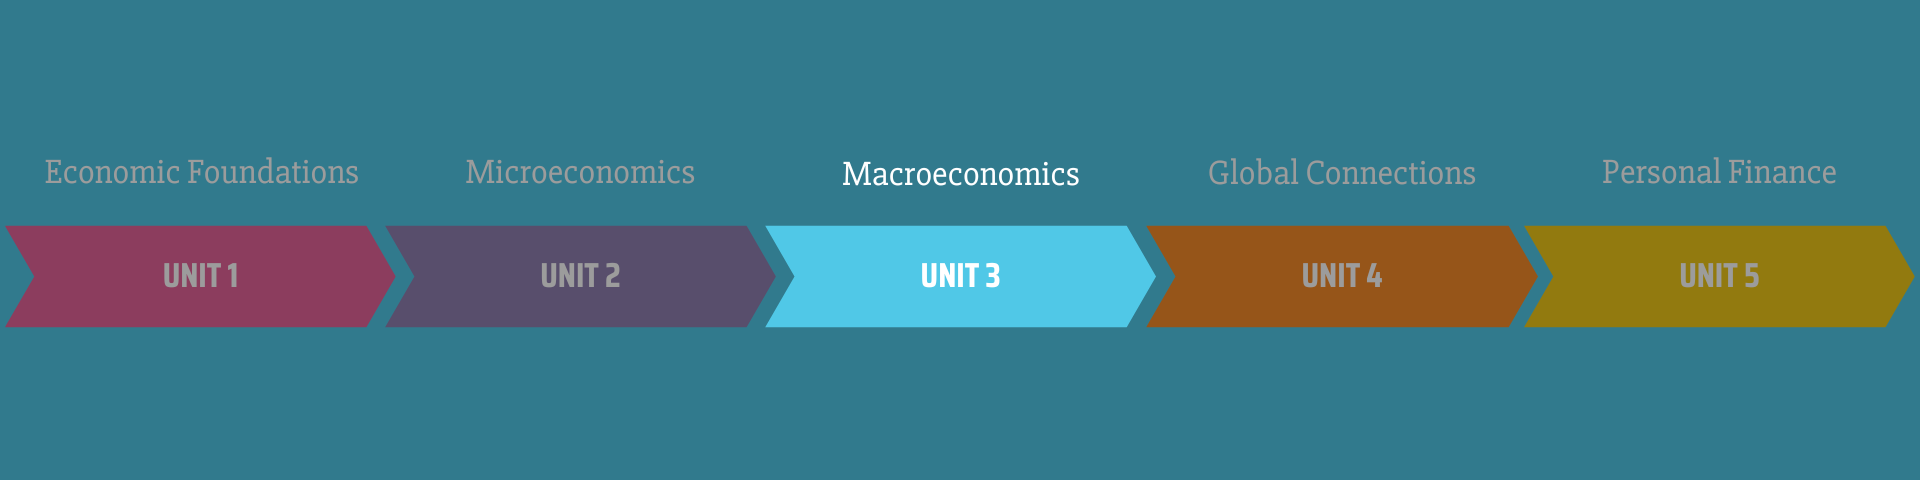 Unit 3: Macroeconomics 